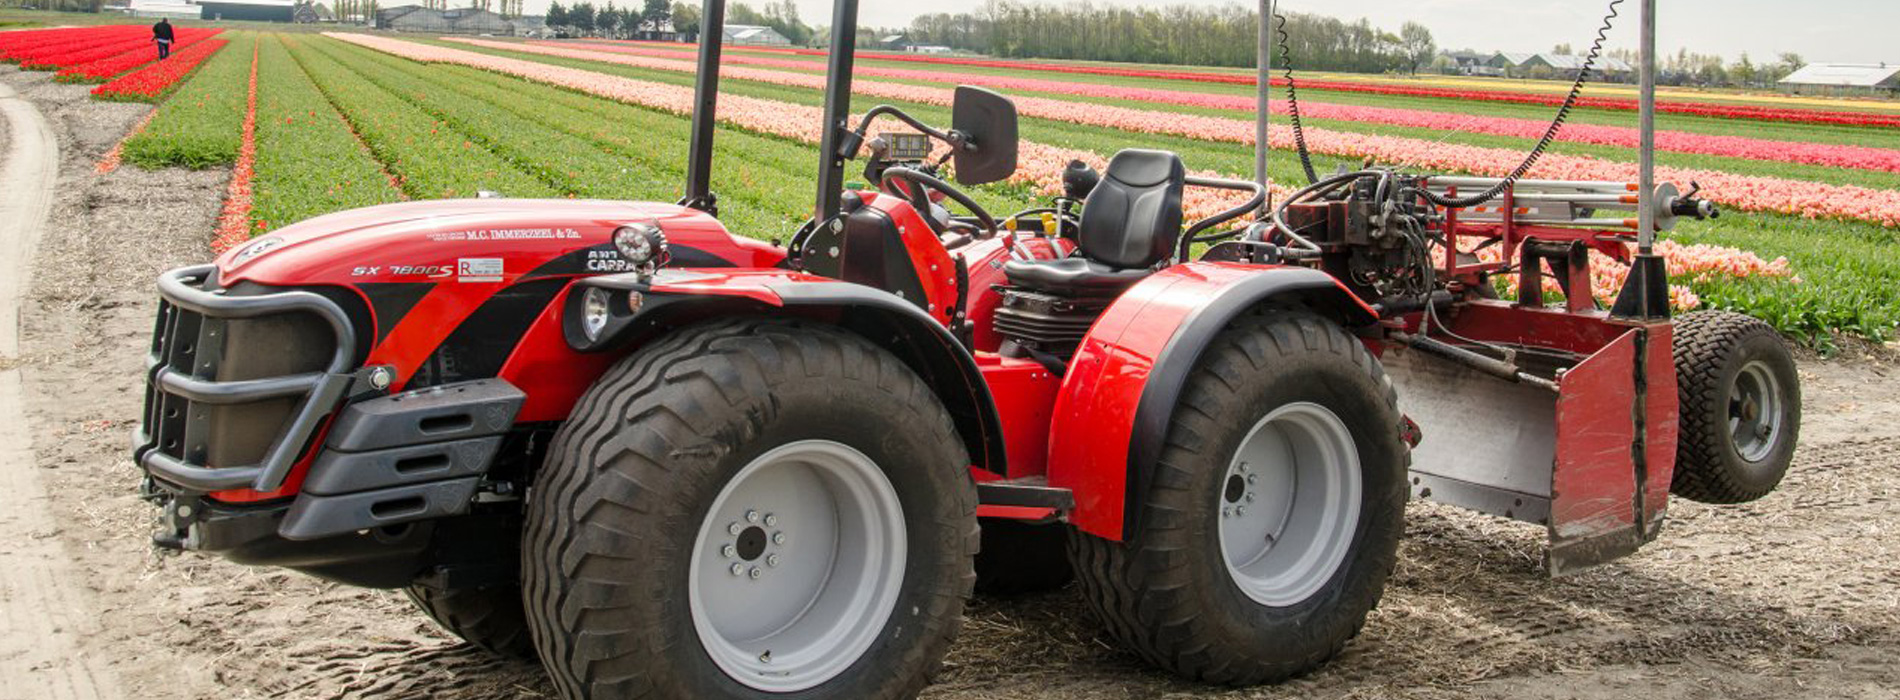 SX 7800 de 71 hp Multi utility tractors for farming or forest